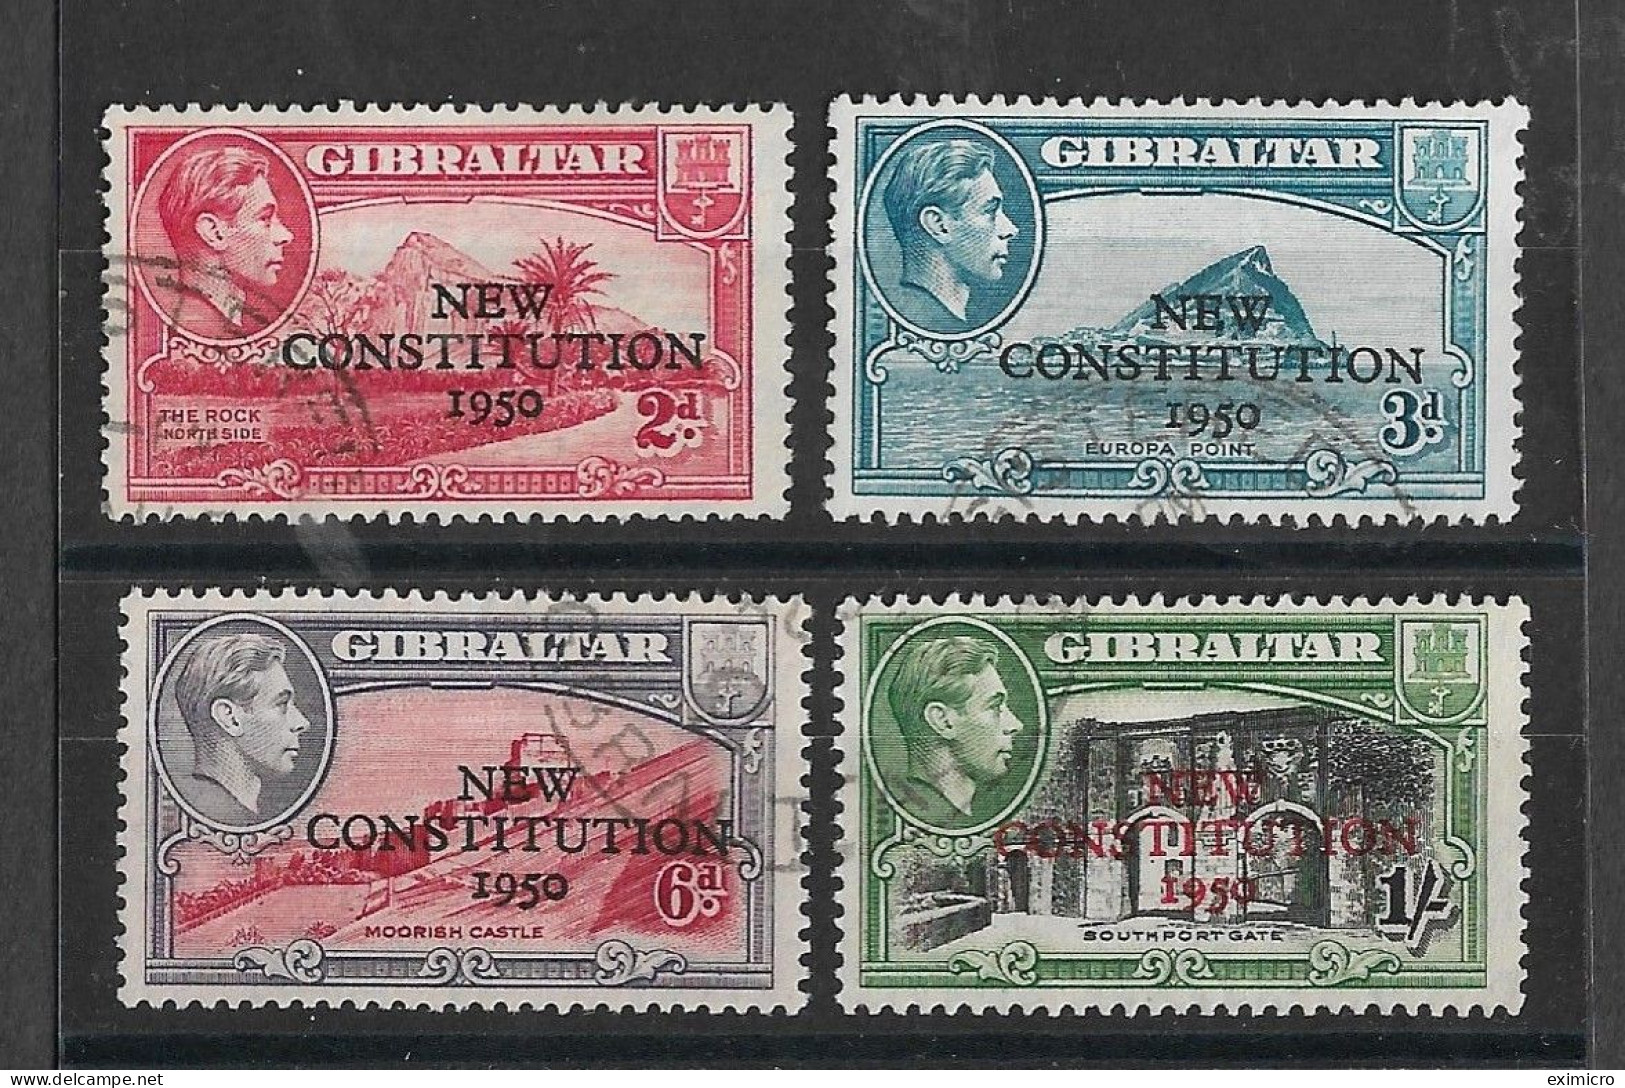 GIBRALTAR 1950 NEW CONSTITUTION SET SG 140/143 FINE USED Cat £8 - Gibraltar